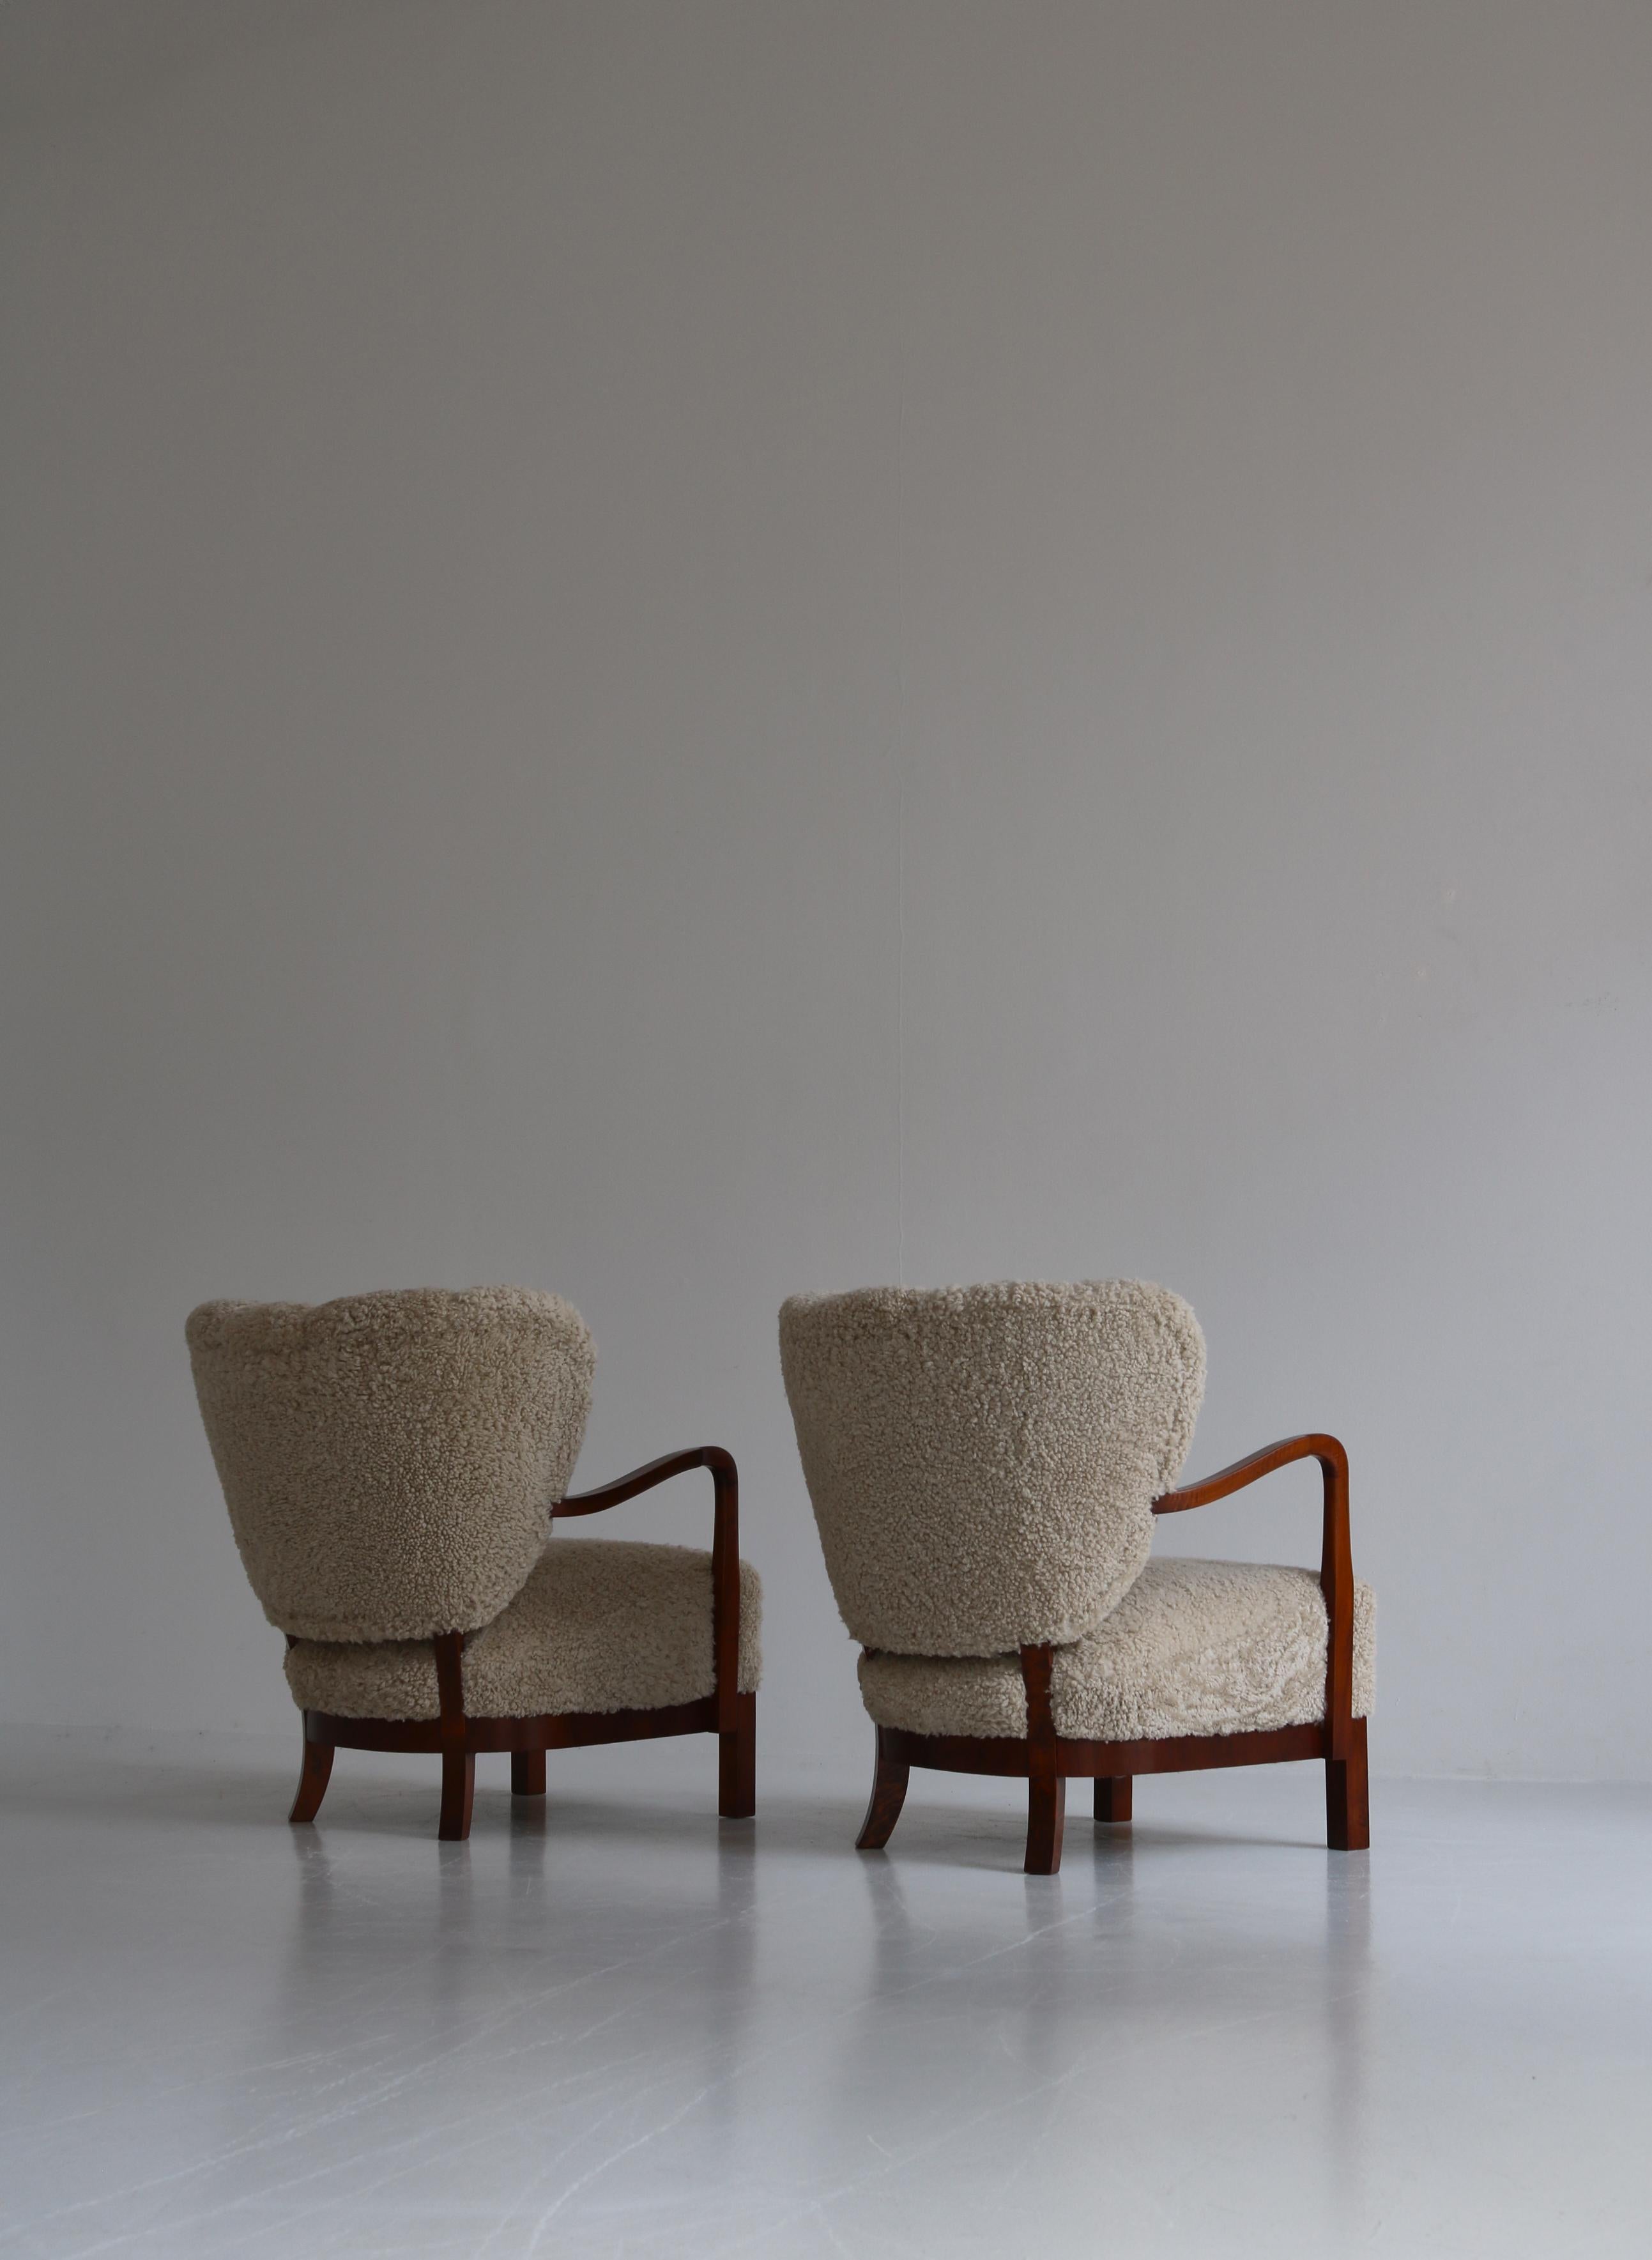 Viggo Boesen Lounge Chairs in Nutwood and Sheepskin, 1930s Danish Modern For Sale 1